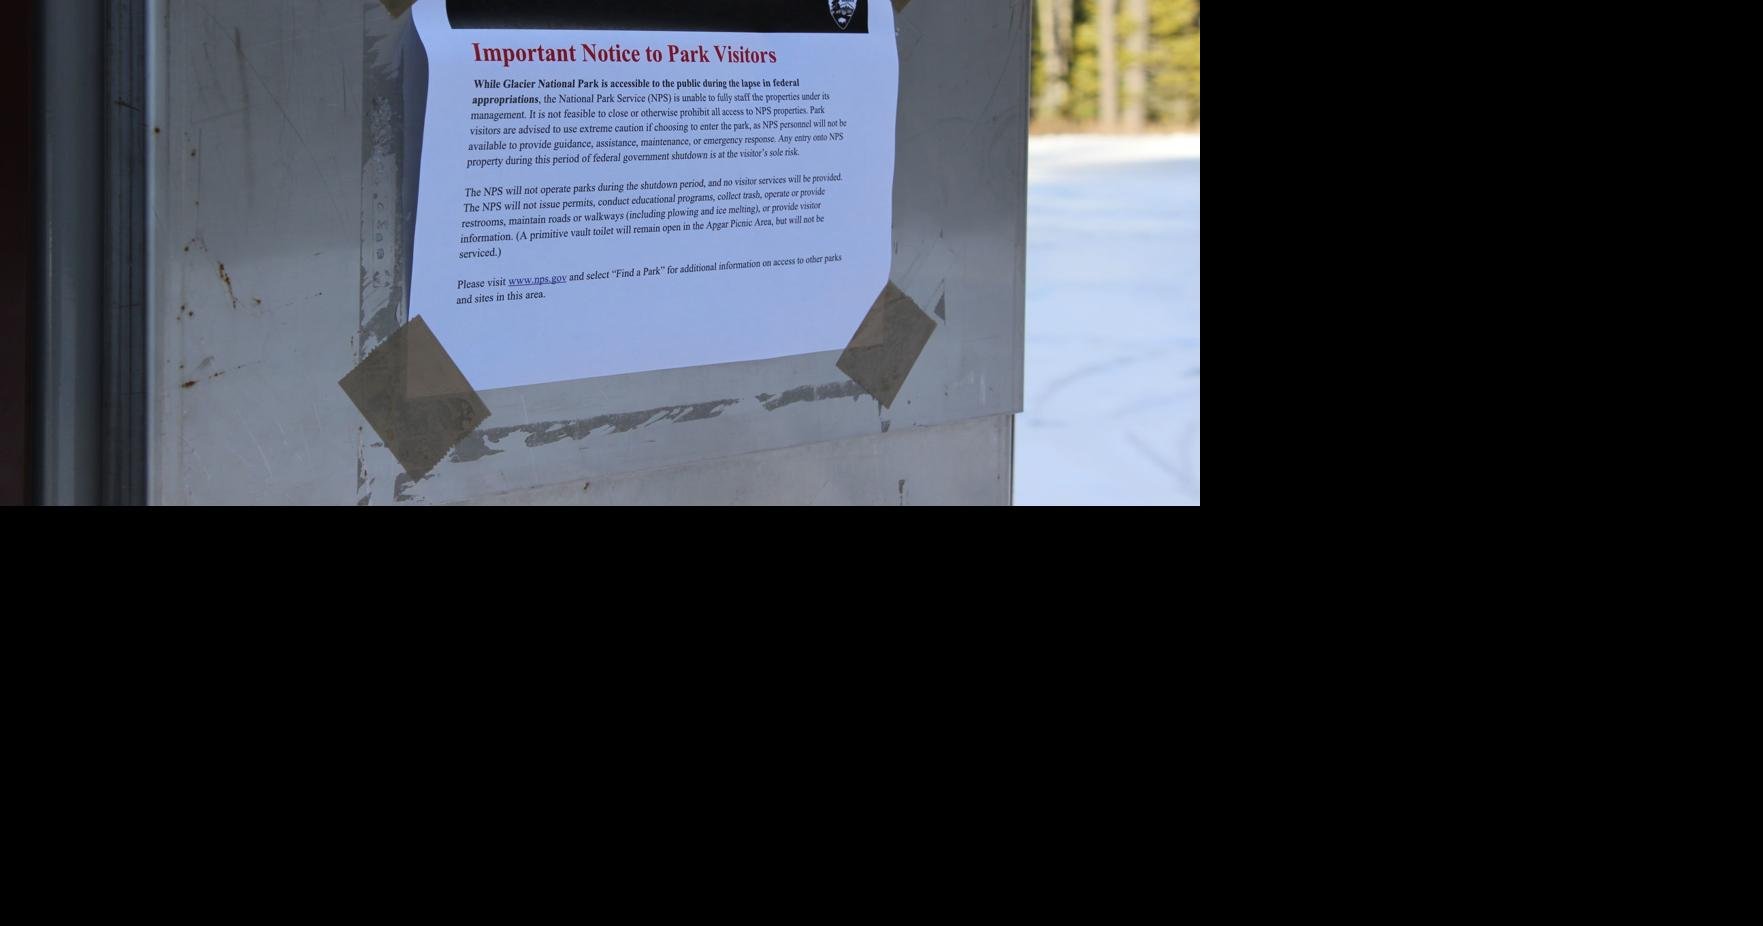 For Glacier National Park visitors, government shutdown makes little